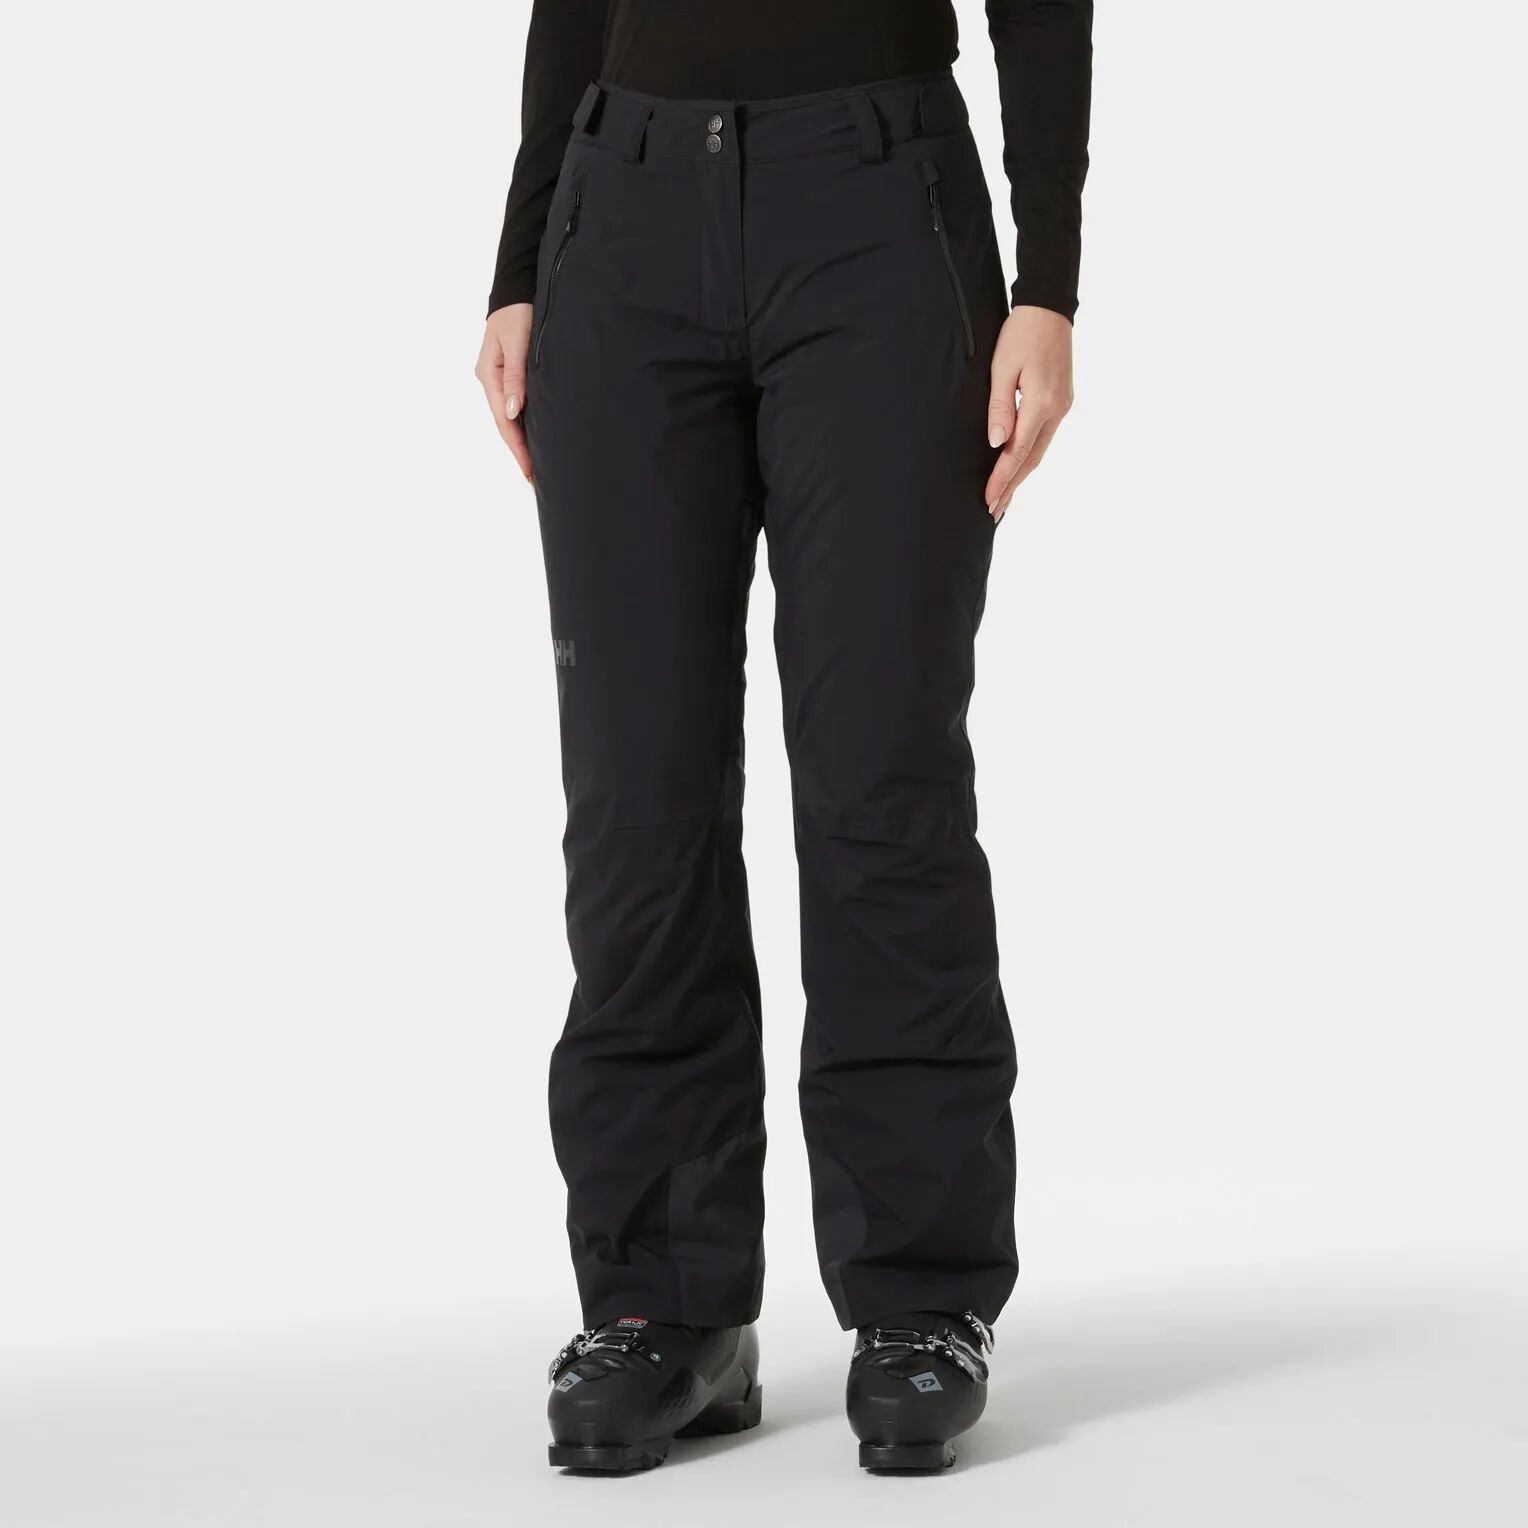 Helly Hansen Women's Legendary Insulated Ski Pants Black L